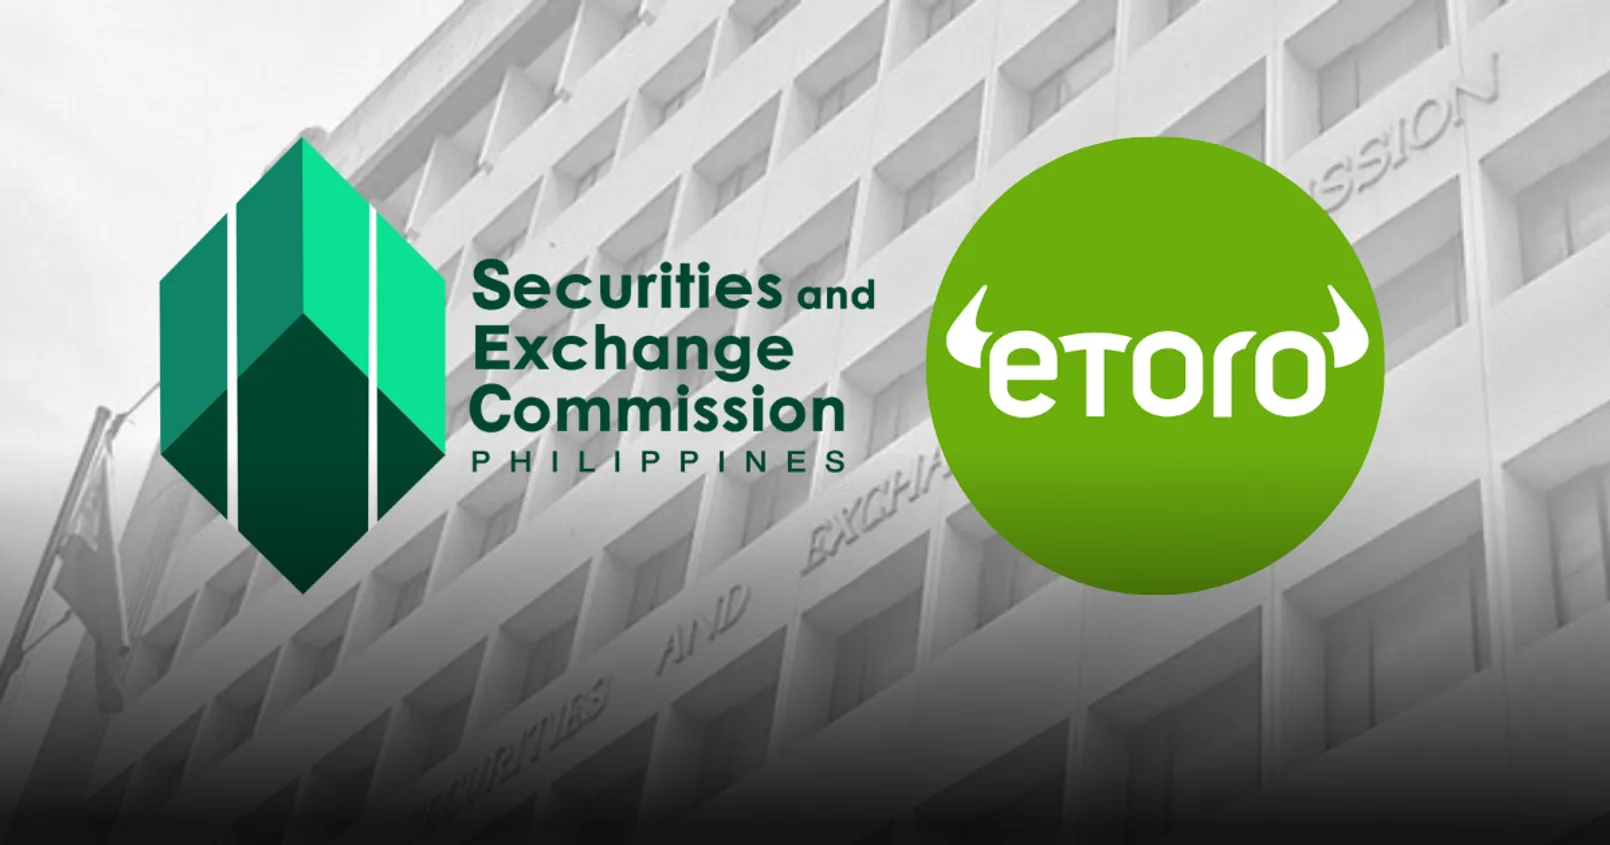 SEC ฟิลิปปินส์ ประกาศเตือน! ให้นักลงทุน ระวังการใช้งานแพลตฟอร์ม 'eToro'